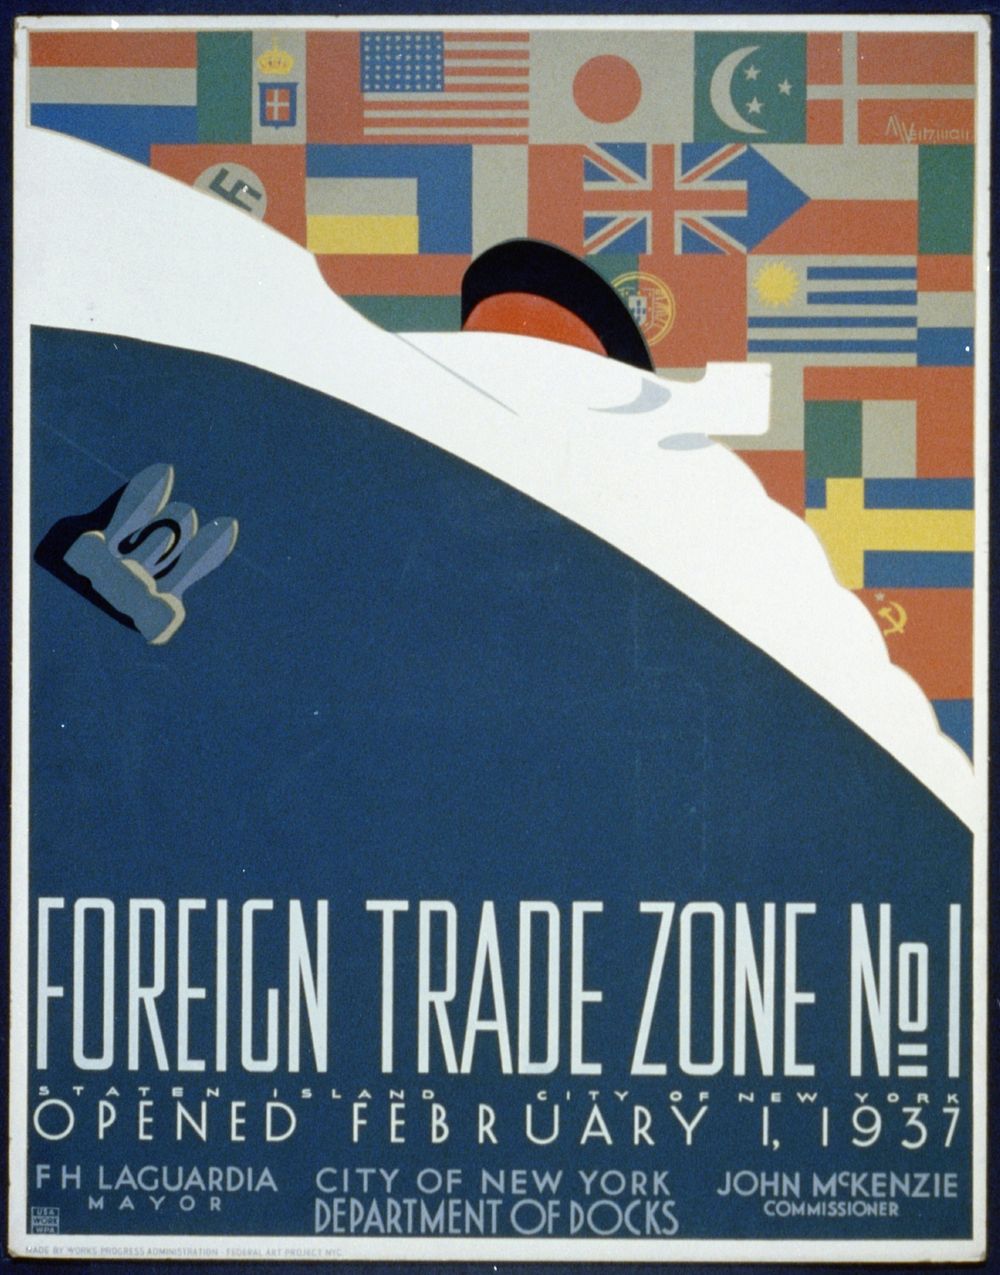 Foreign trade zone no. 1 Staten Island, City of New York, opened February 1, 1937 M. Weitzman.